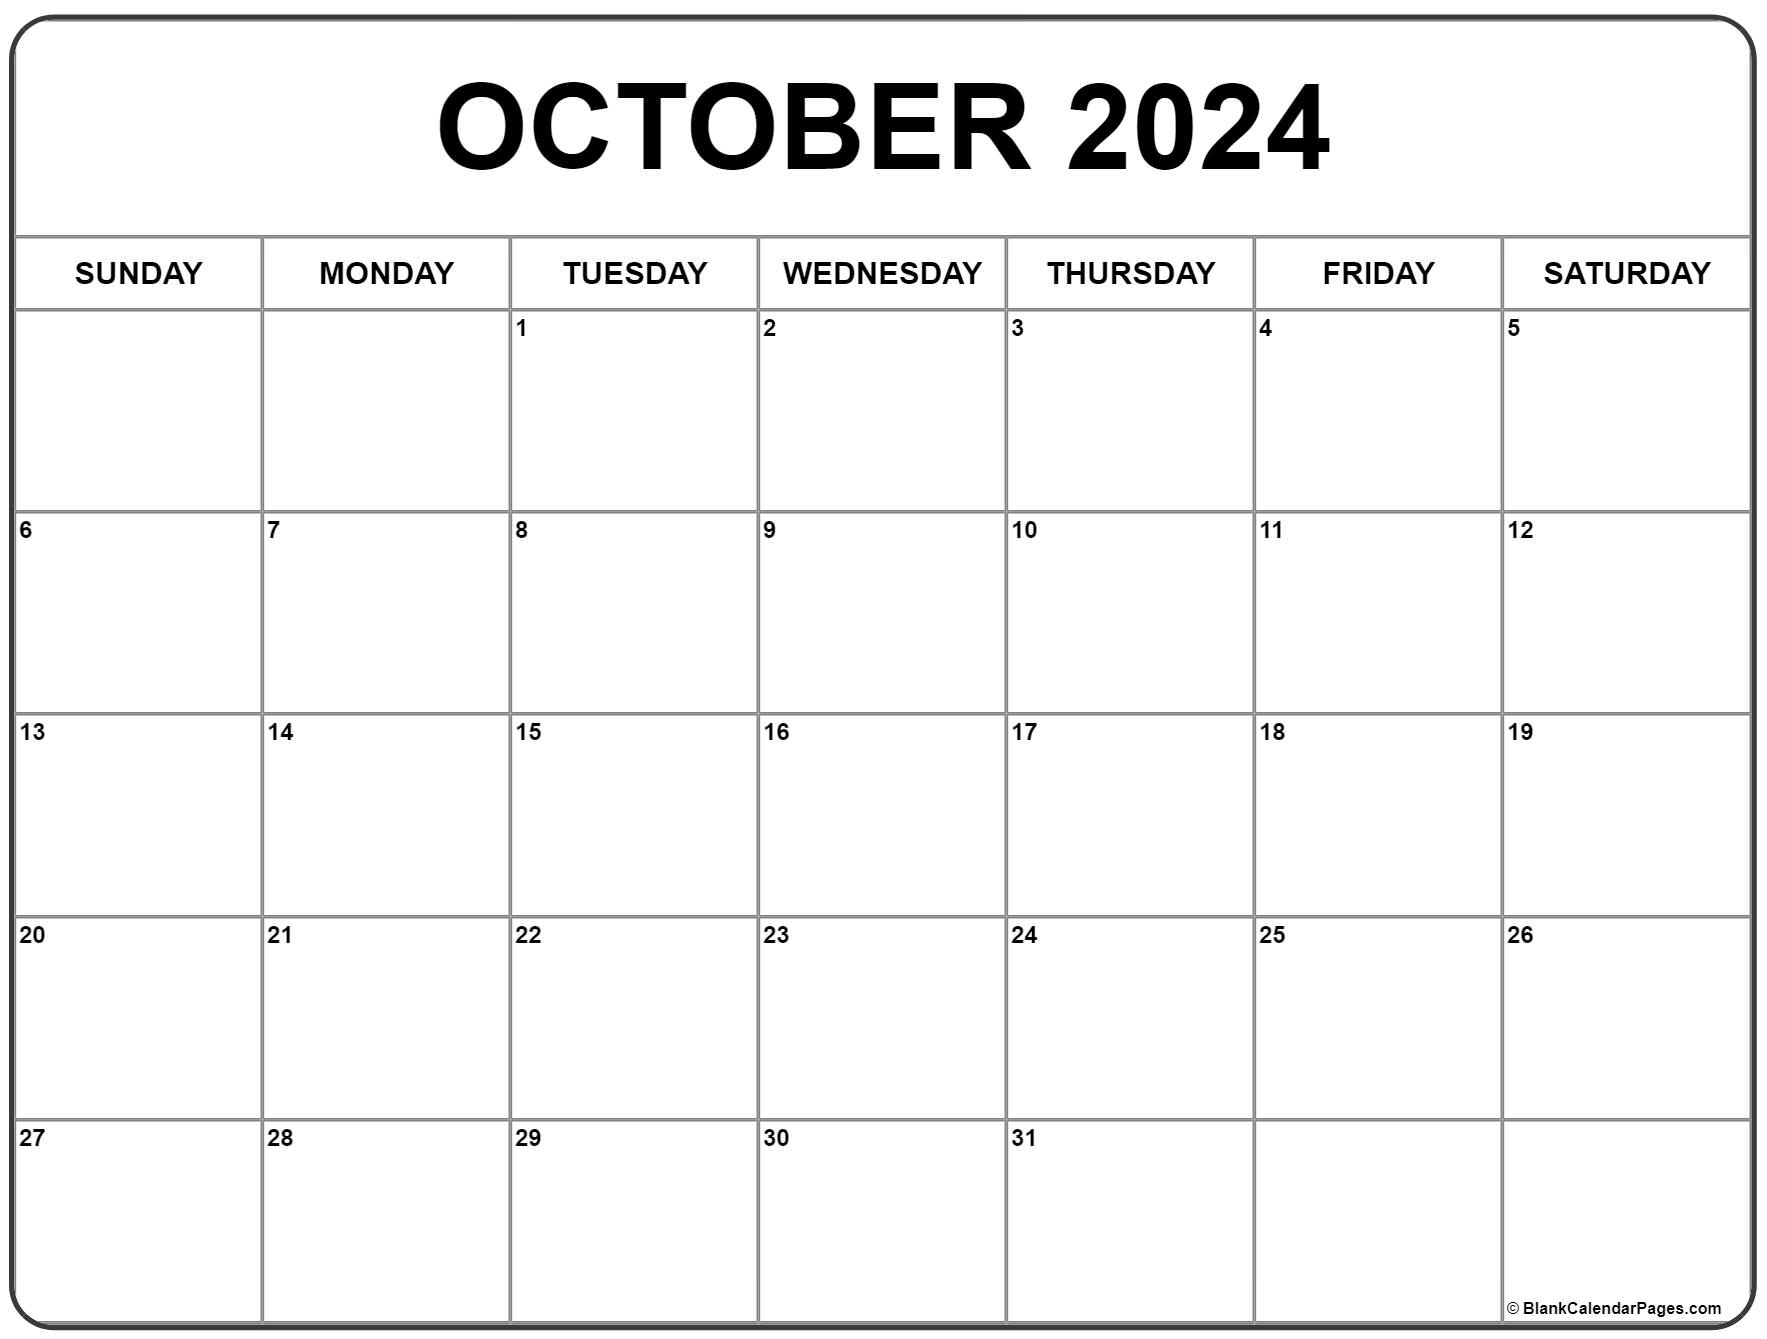 October 2024 Calendar | Free Printable Calendar for Free Printable Calendar October 2024